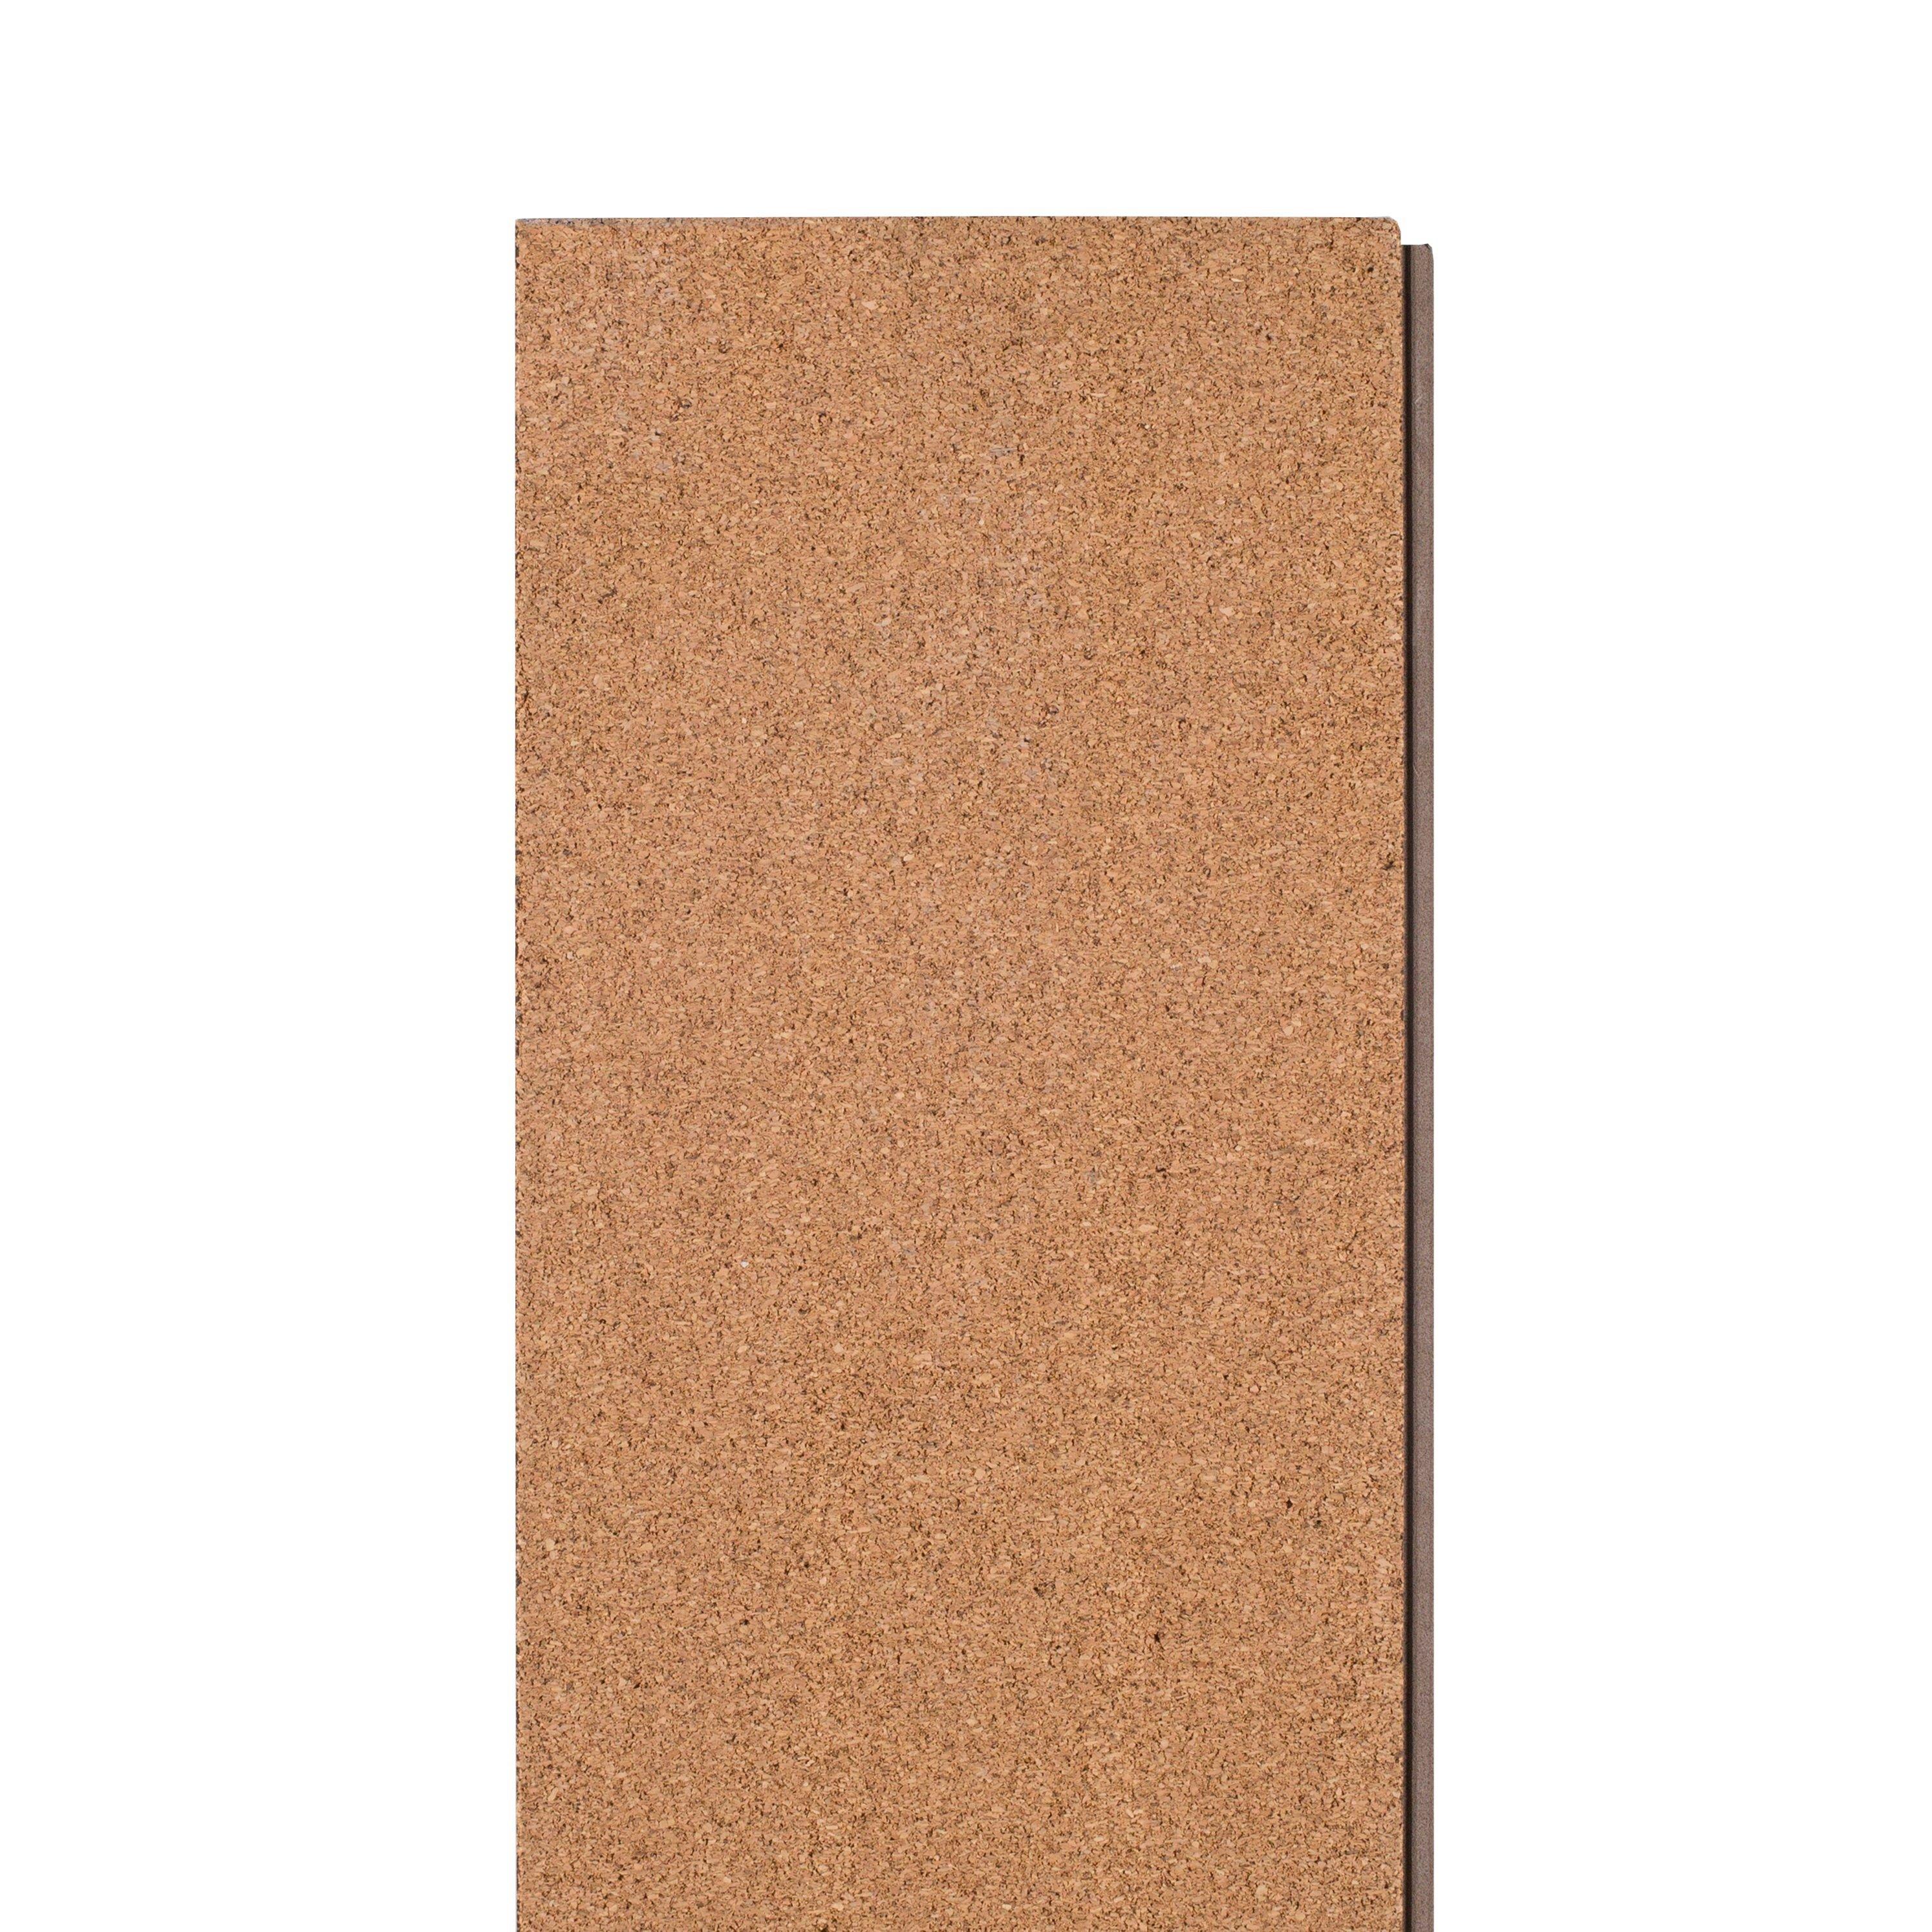 Staccato Stone Rigid Core Luxury Vinyl Tile - Cork Back